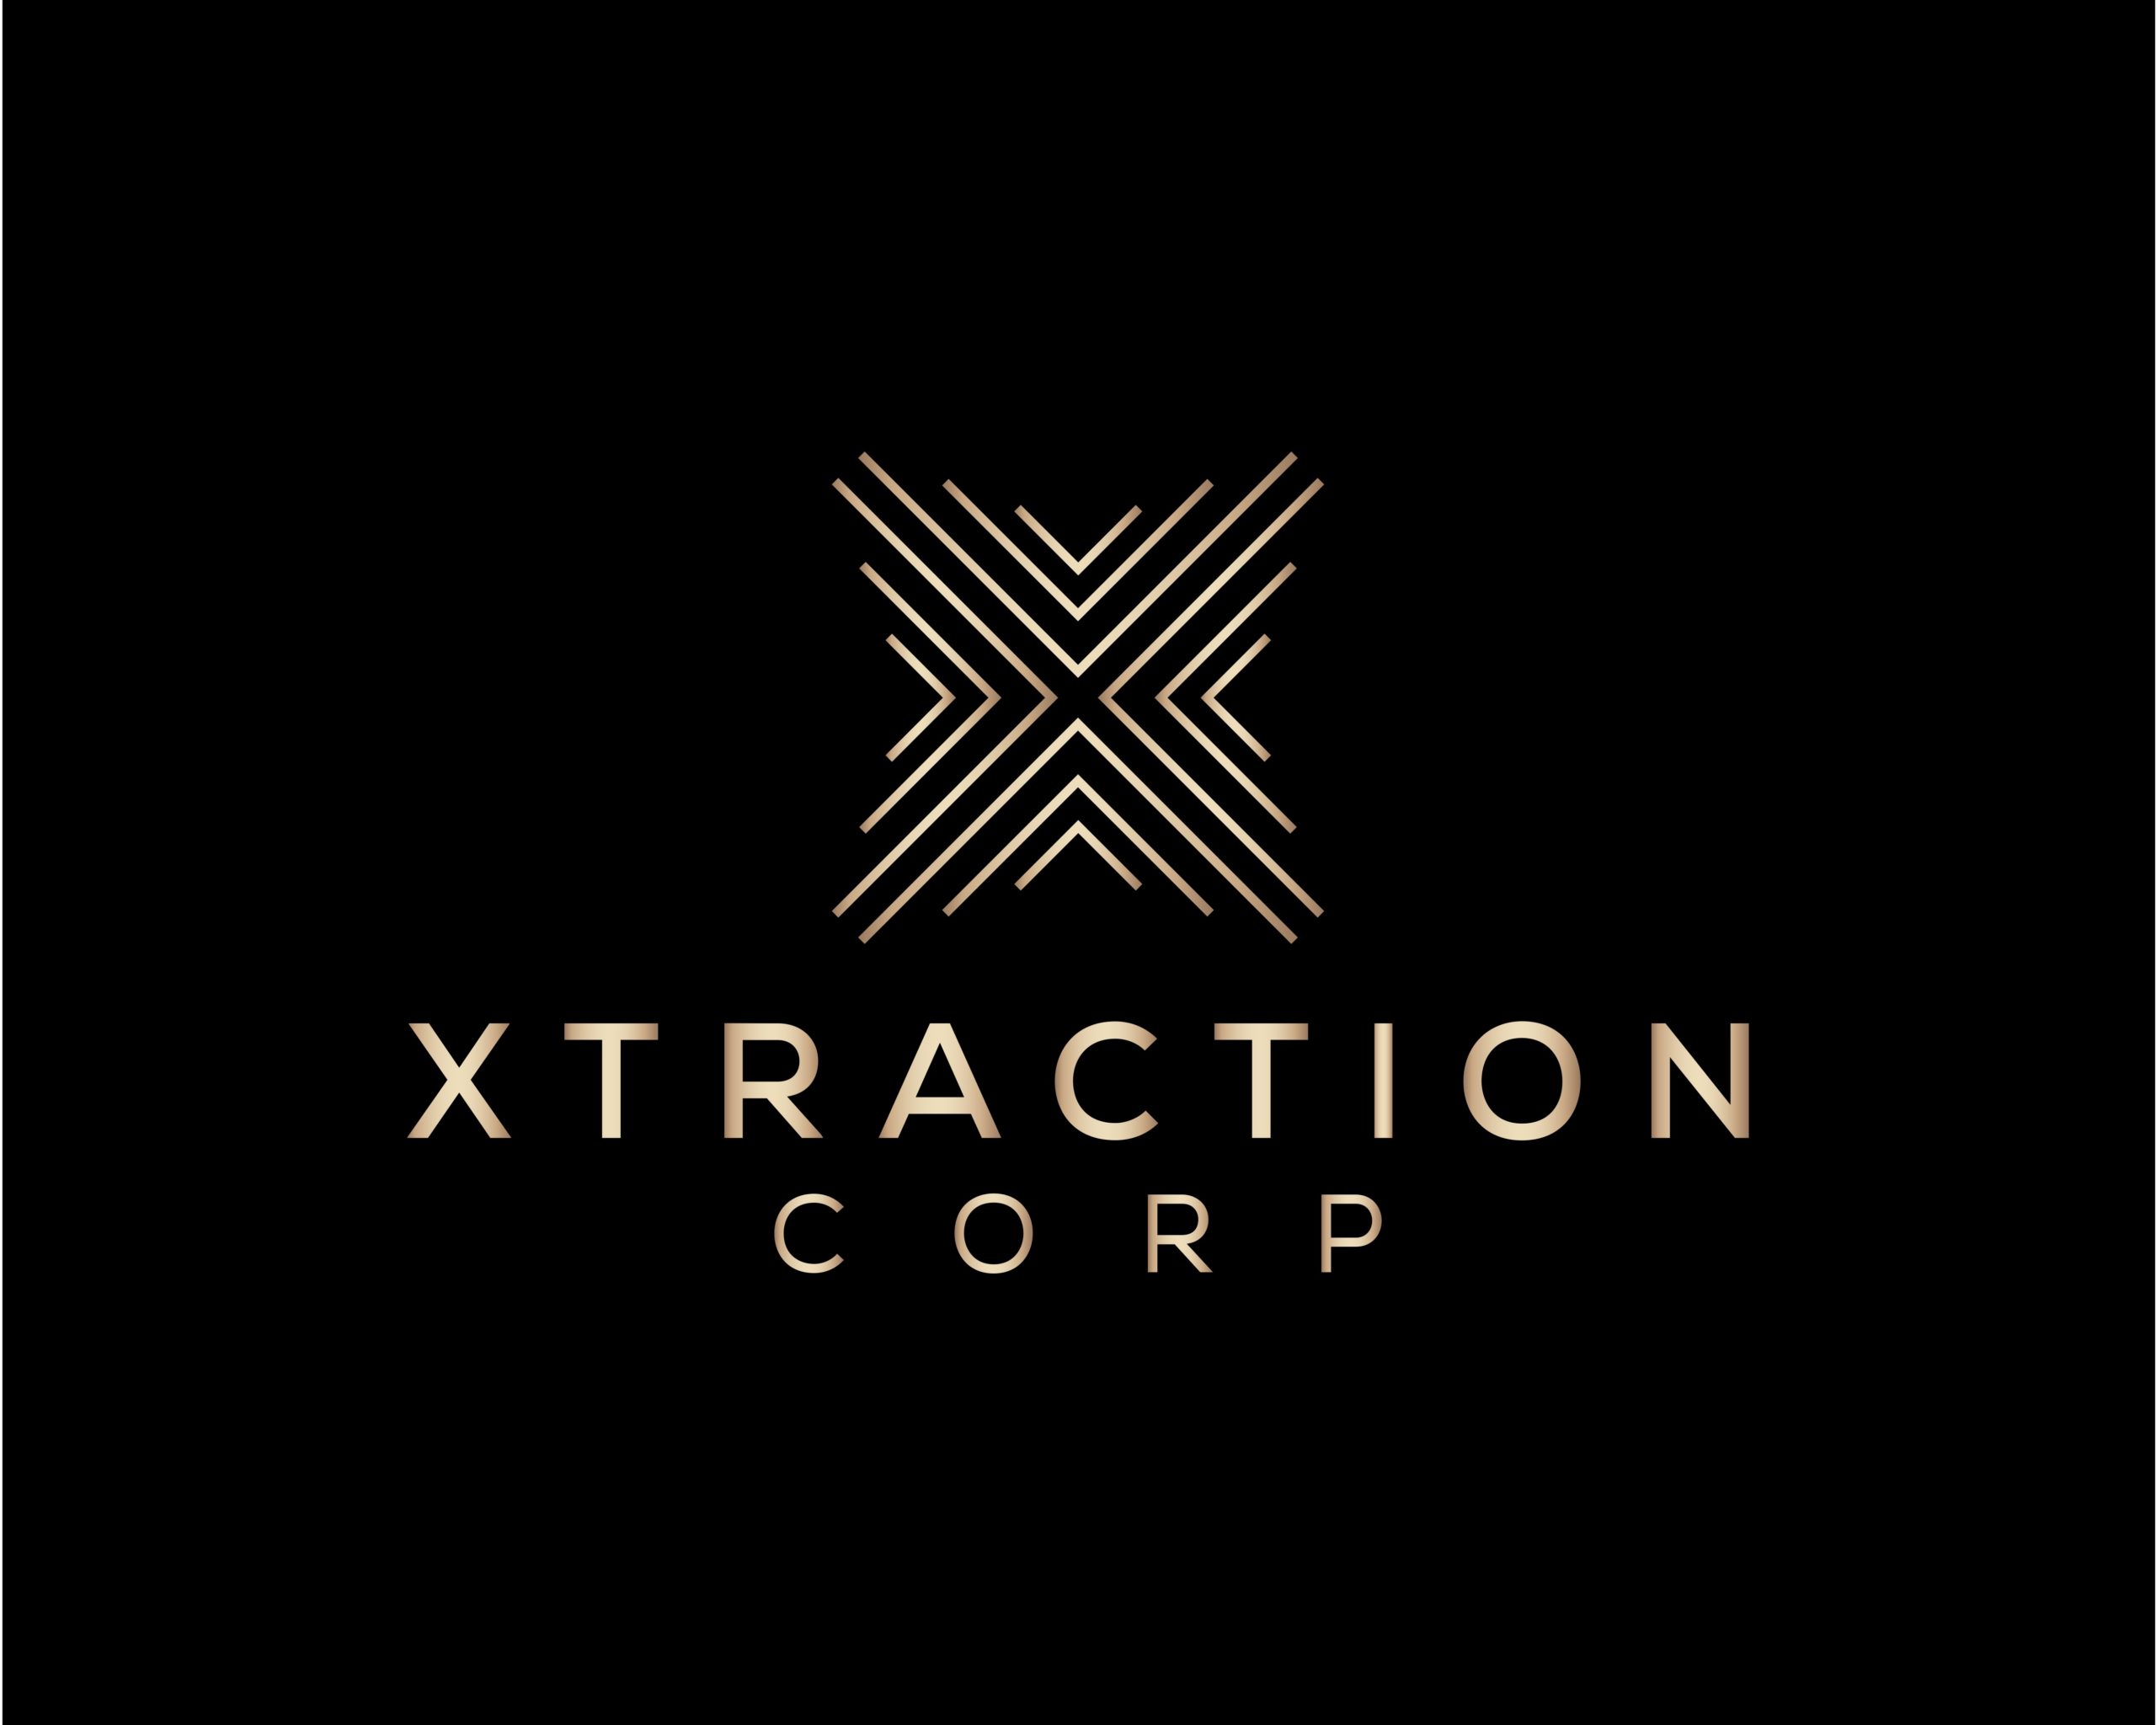 Xtraction Corp logo